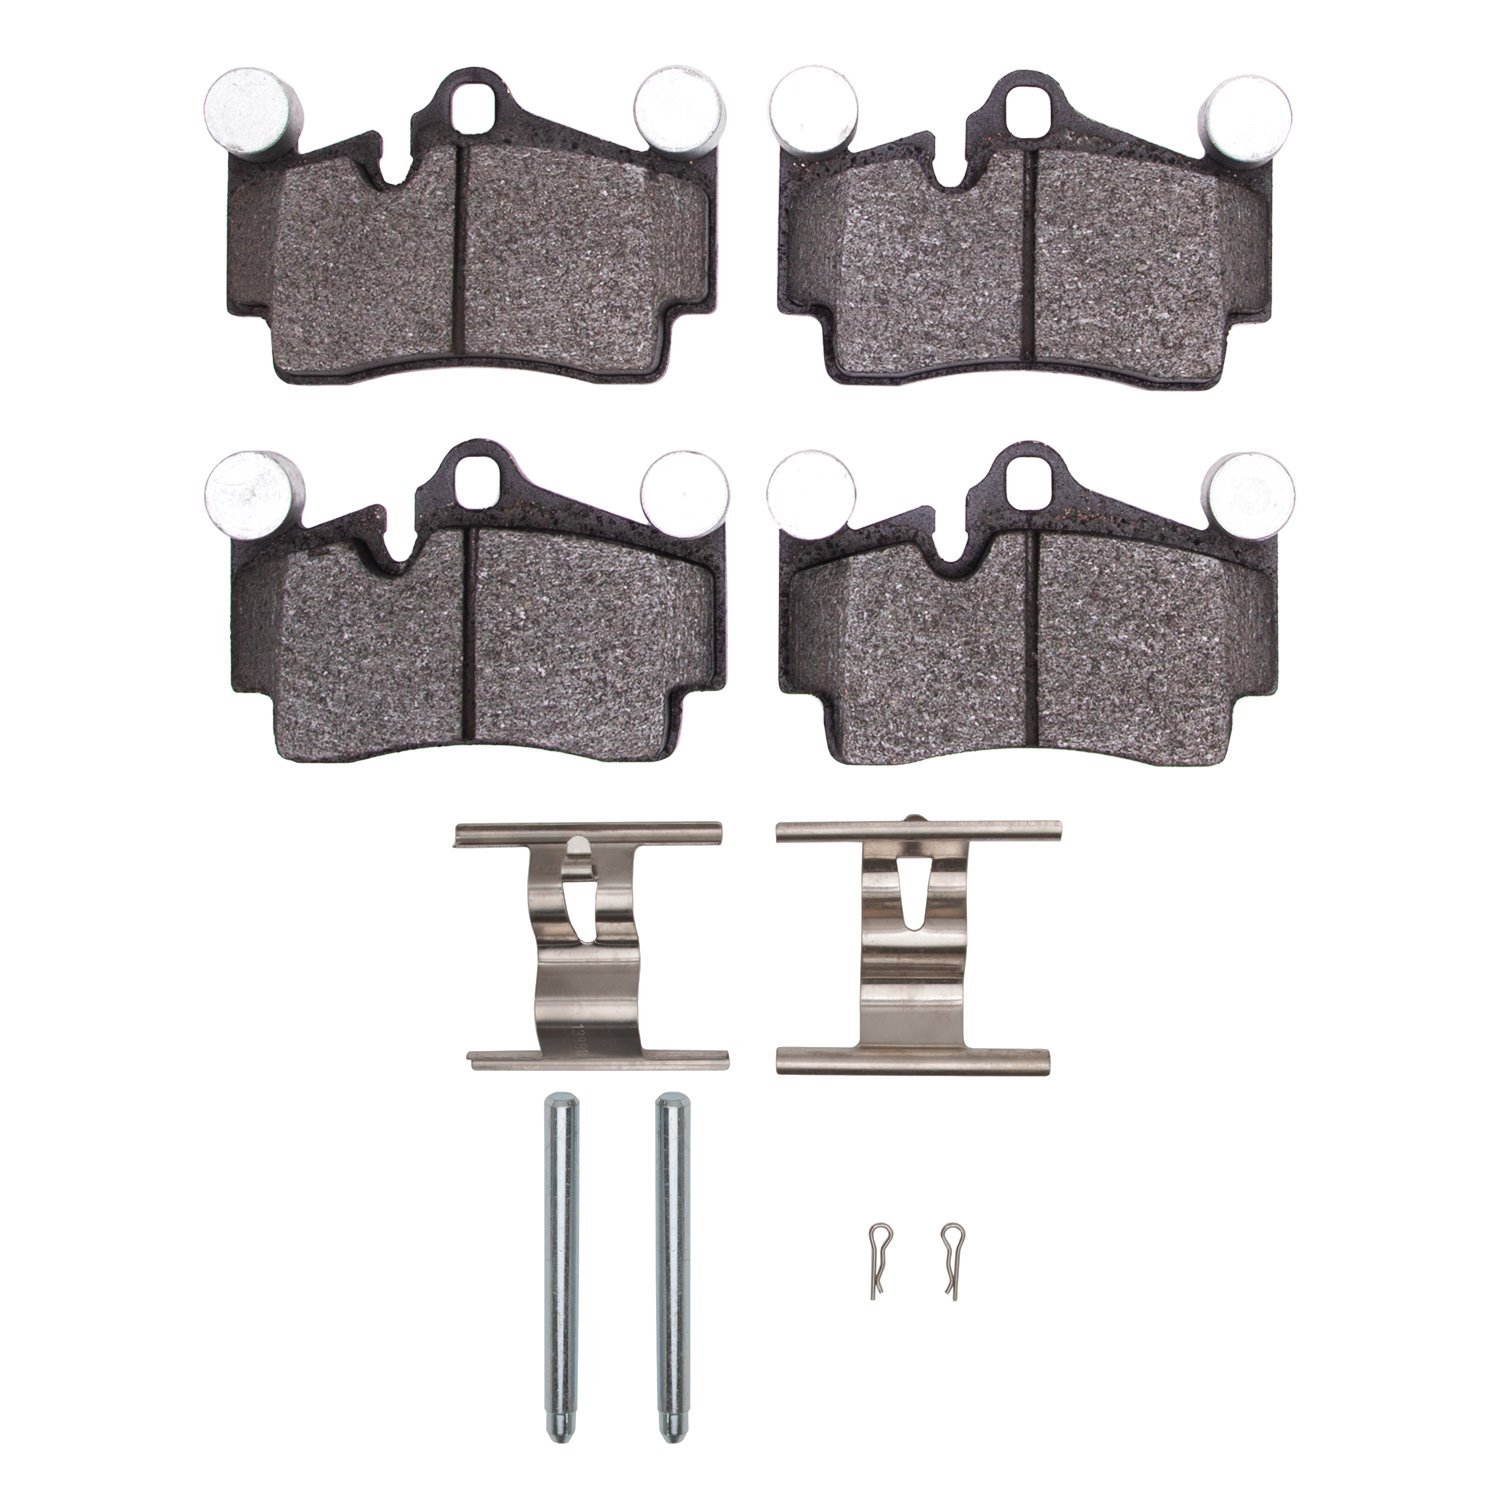 1310-0978-01 3000-Series Ceramic Brake Pads & Hardware Kit, 2003-2015 Multiple Makes/Models, Position: Rear